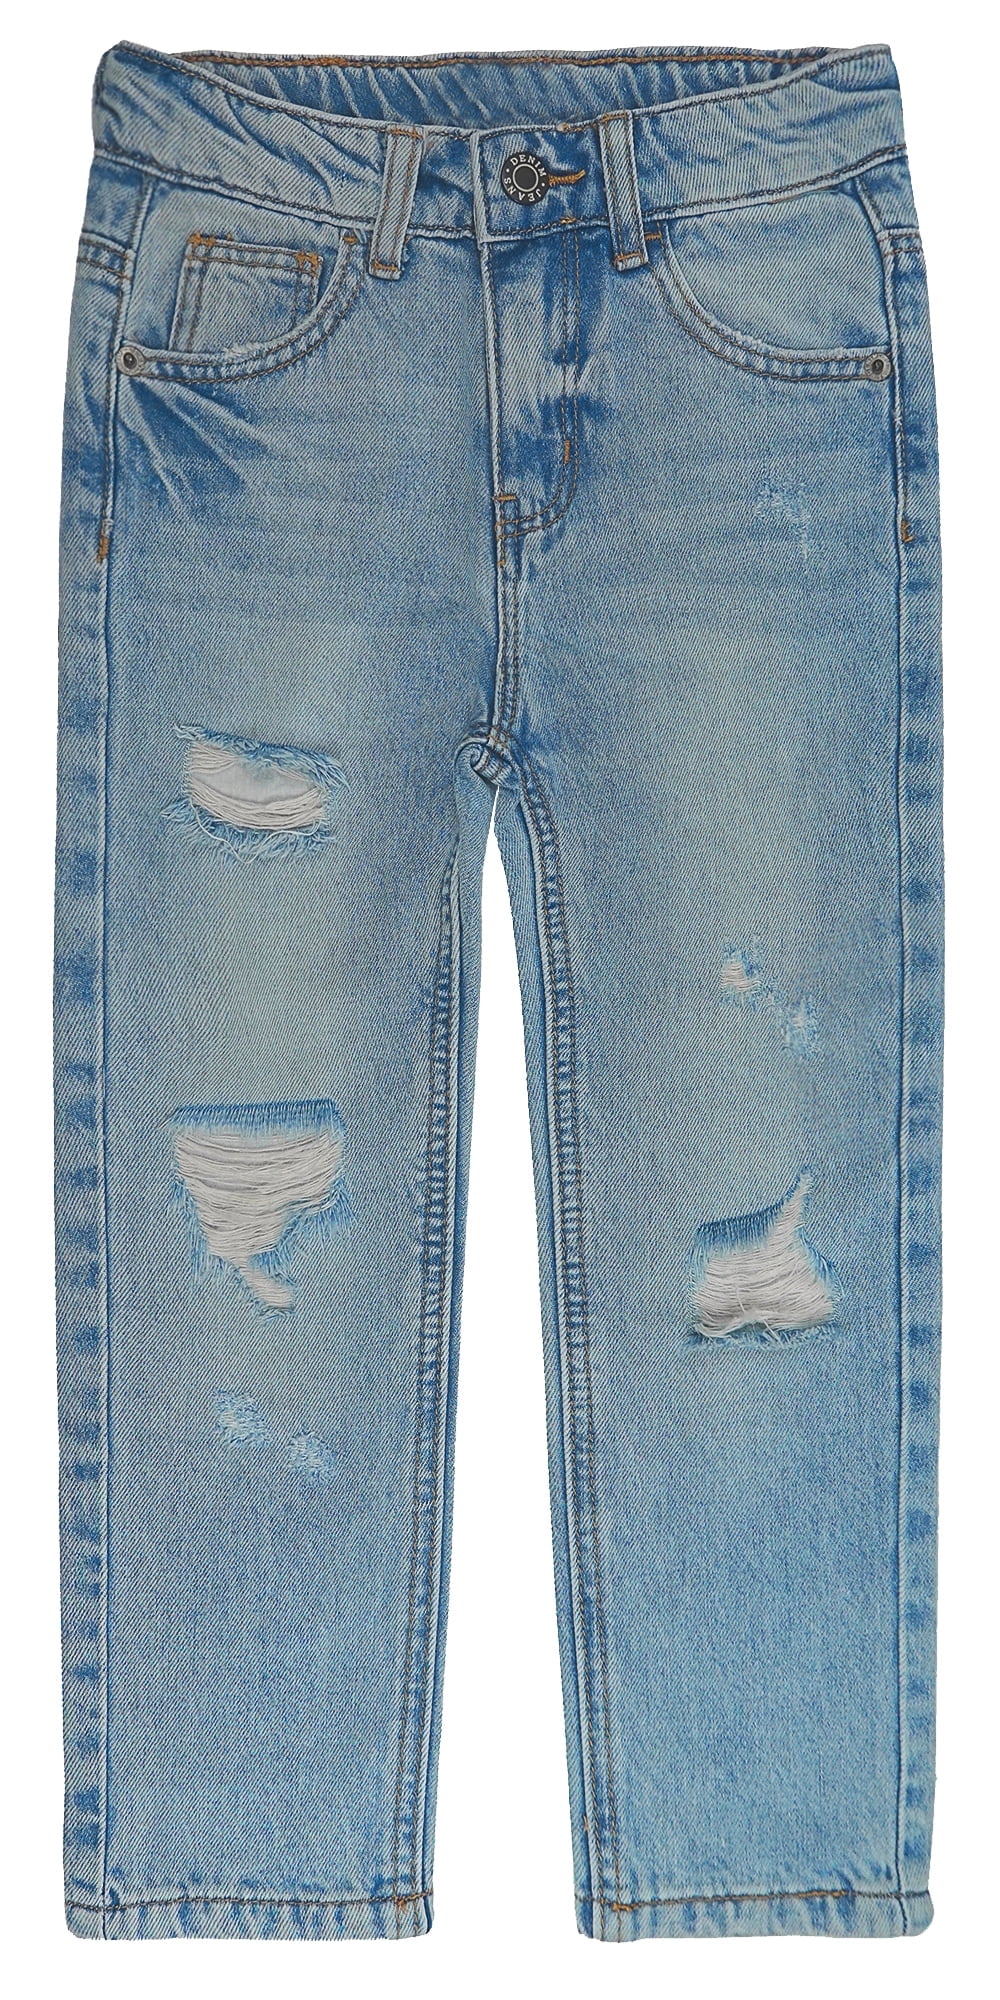 Tween Boys: Pants, Joggers, Jeans & more | Nordstrom